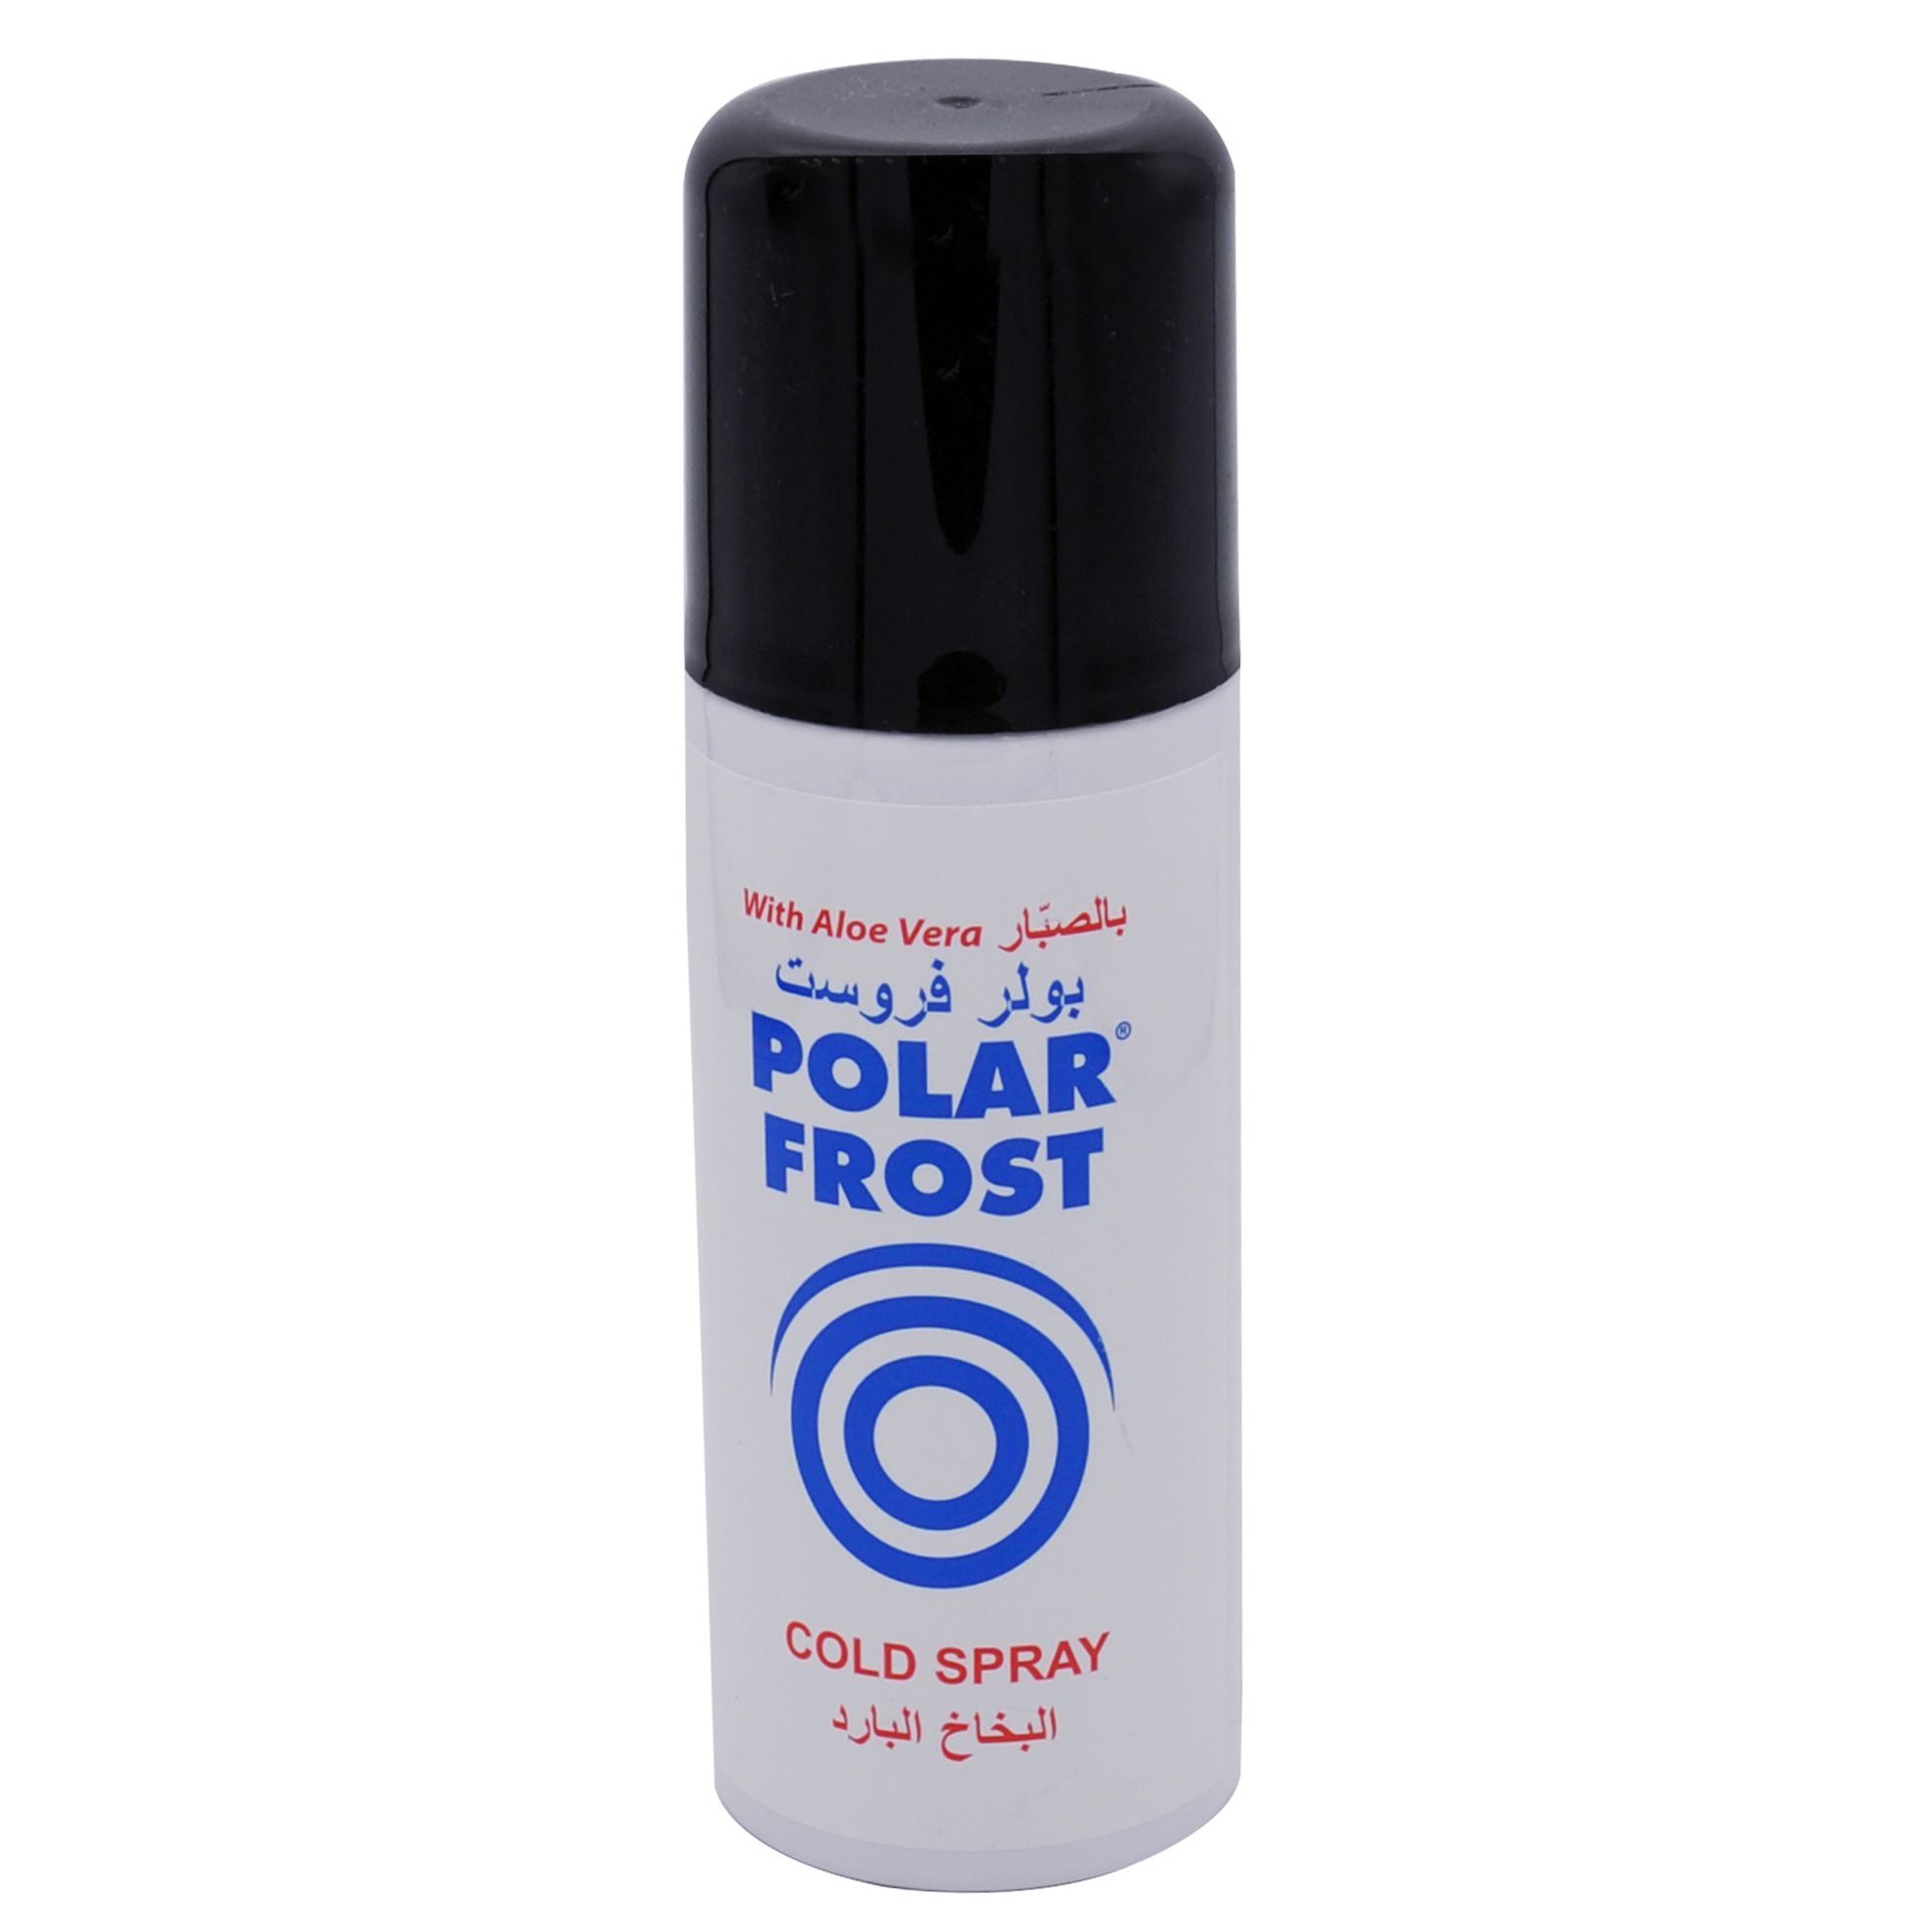 POLAR FROST COLD SPRAY 175 ML